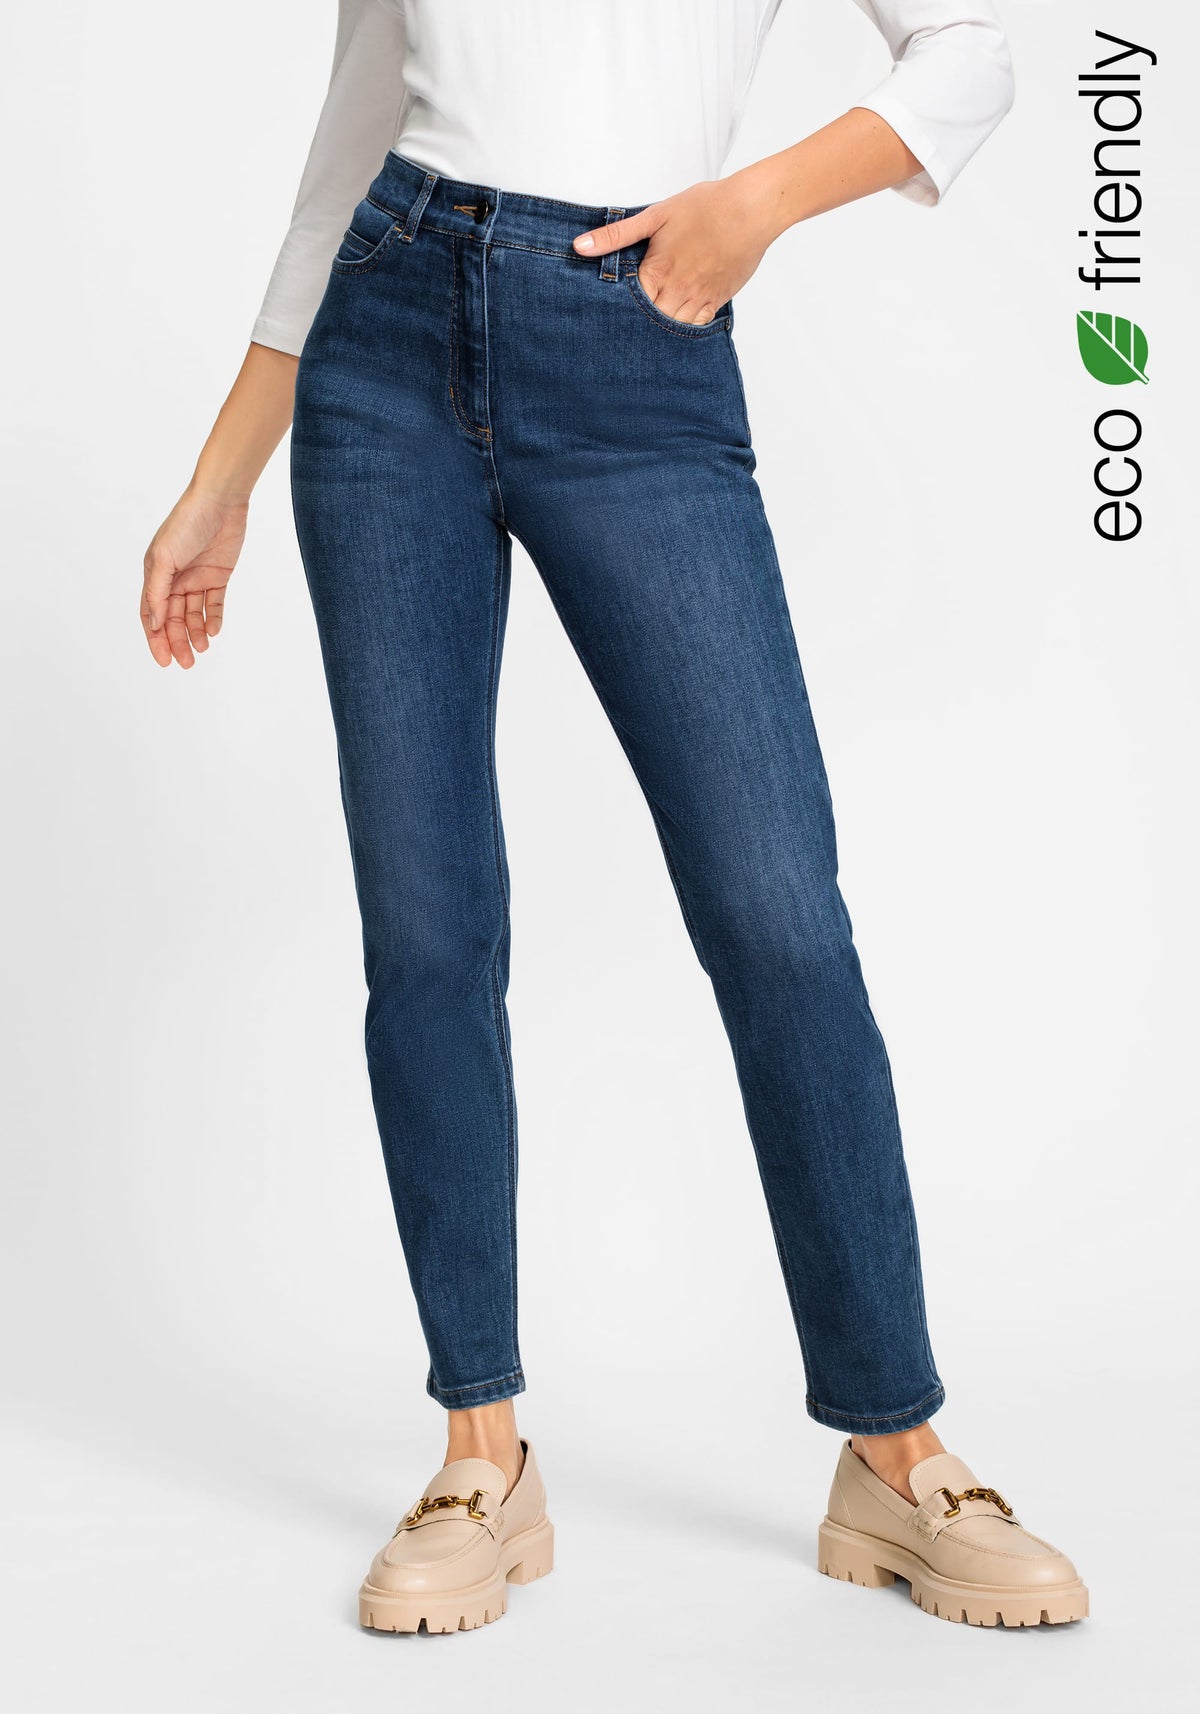 Mona Fit Slim Leg Power Stretch Jean containing REPREVE®